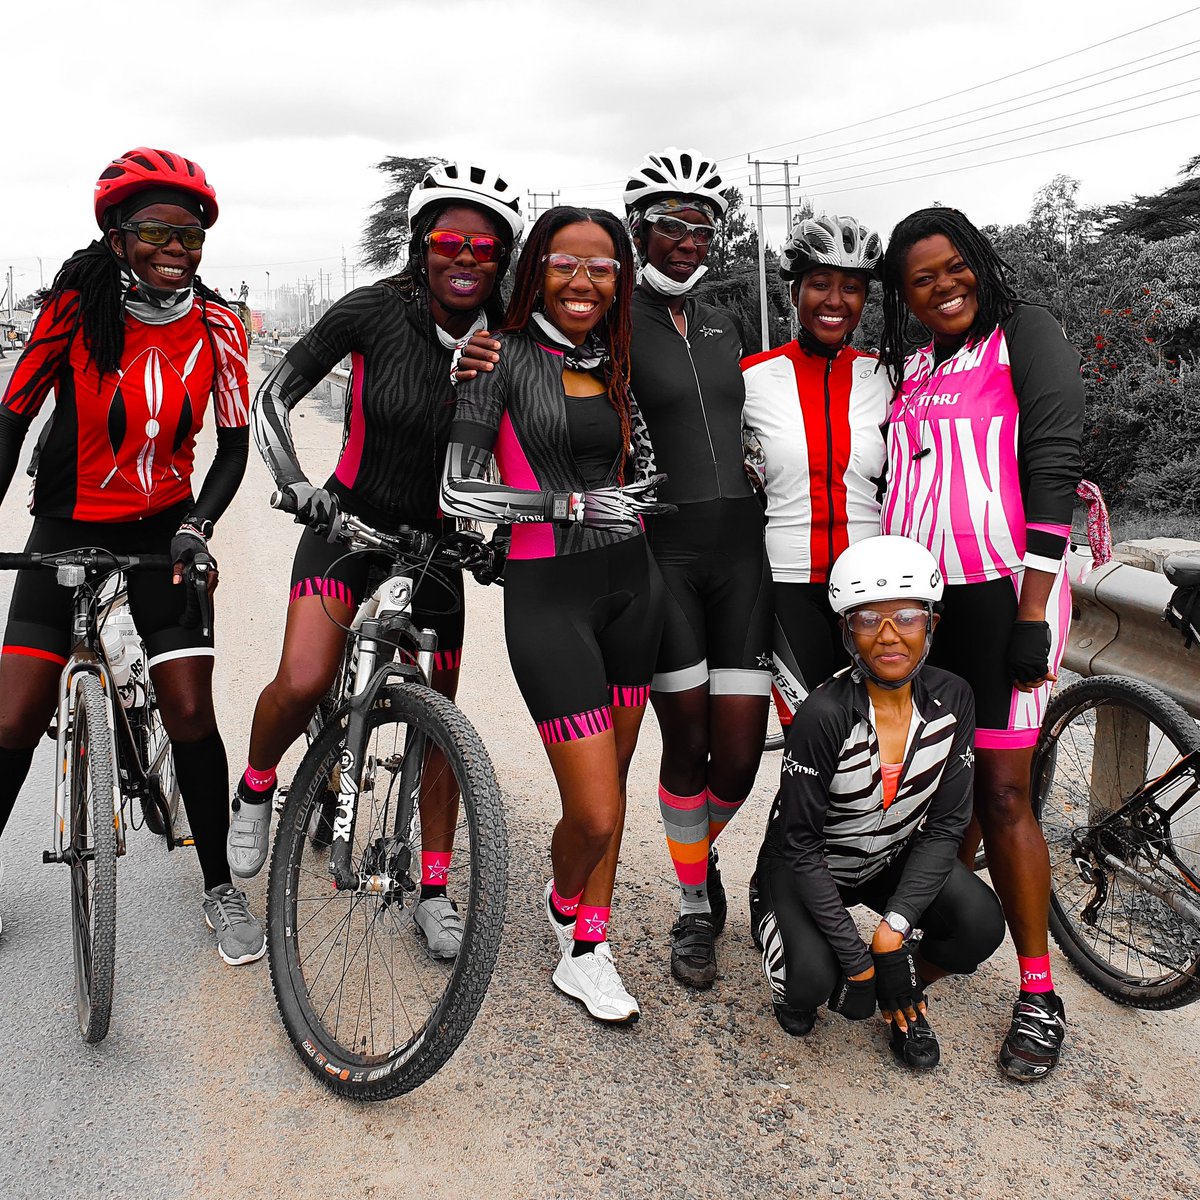 Happy World Bicycle Day..🌎 🚲
:
:
#worldbicycleday #june3 #june3worldbicycleday #womenonbikes #womenwhoride #cycle  #womenfastforward #authenticity #diversity #cycling #authenticity  #weride #proudlykenyan #kenya